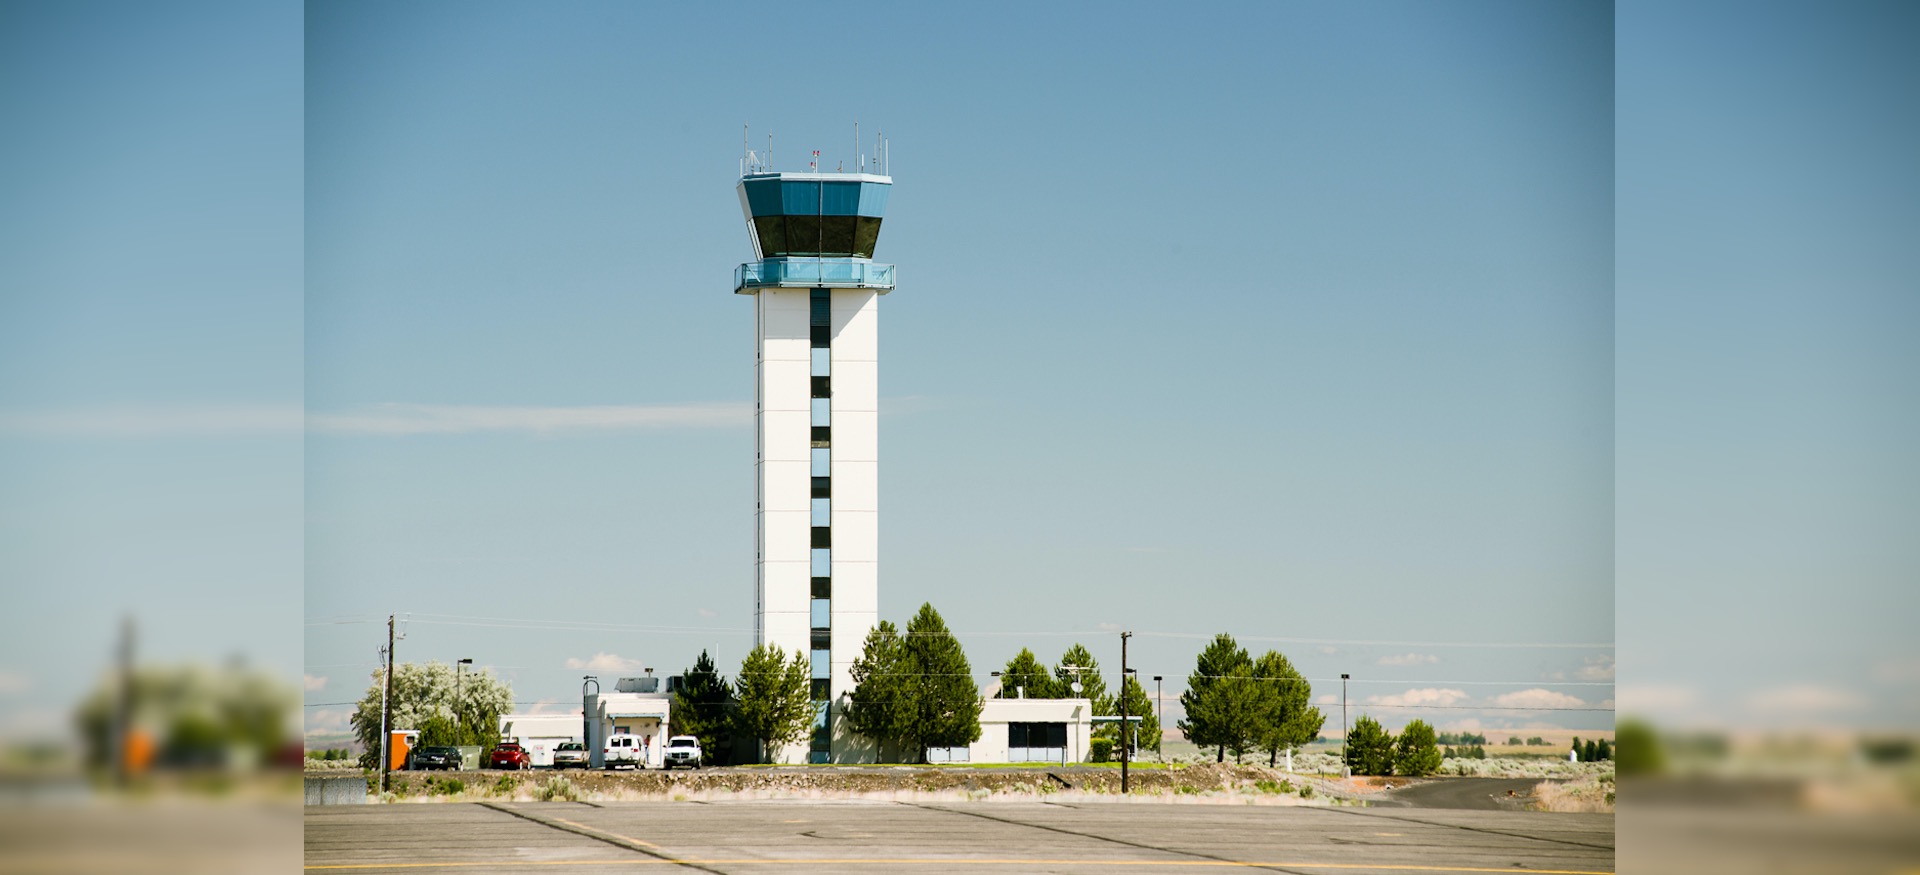 Grant County International Airport Control Tower - Moses Lake, WA